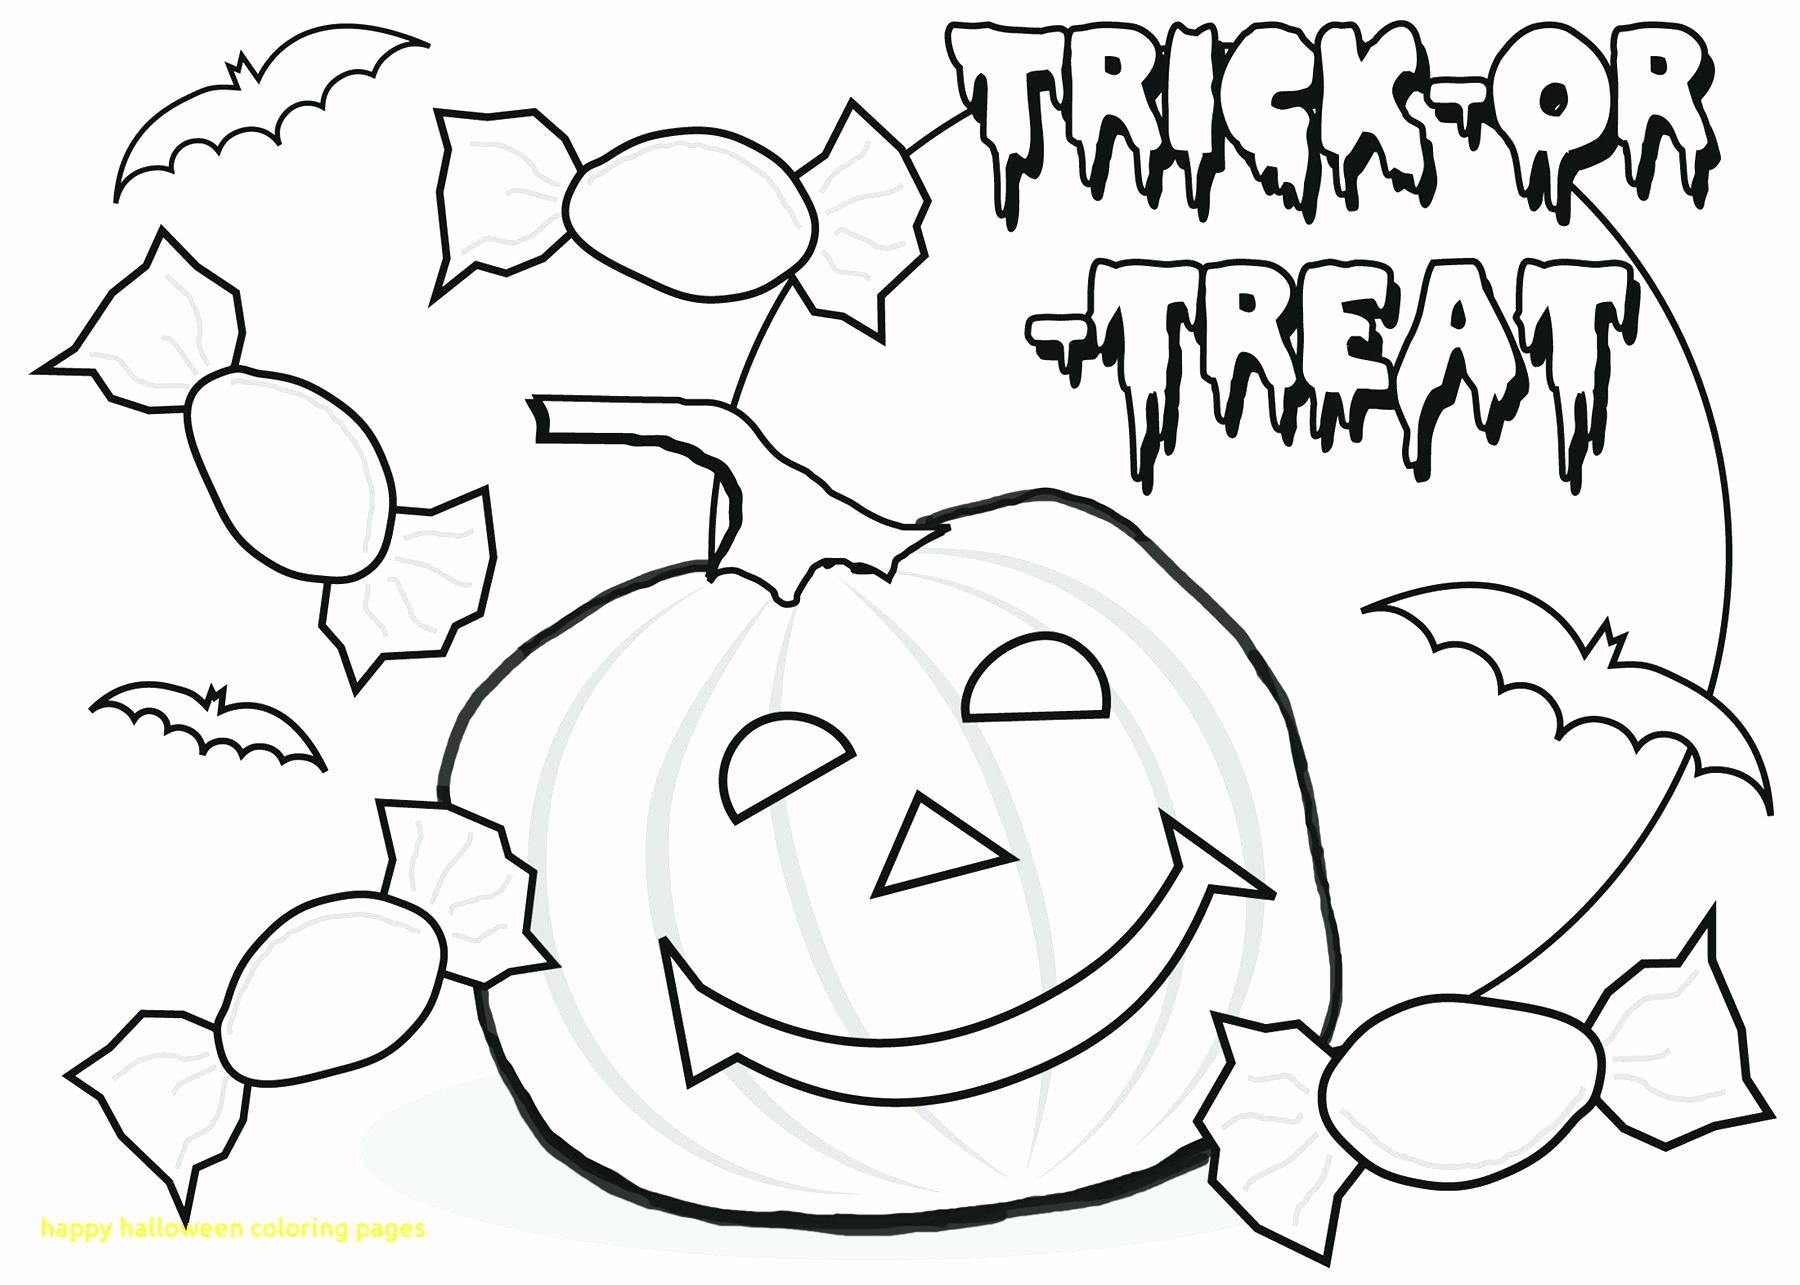 Free Printable Charlie Brown Halloween Coloring Pages at GetColorings